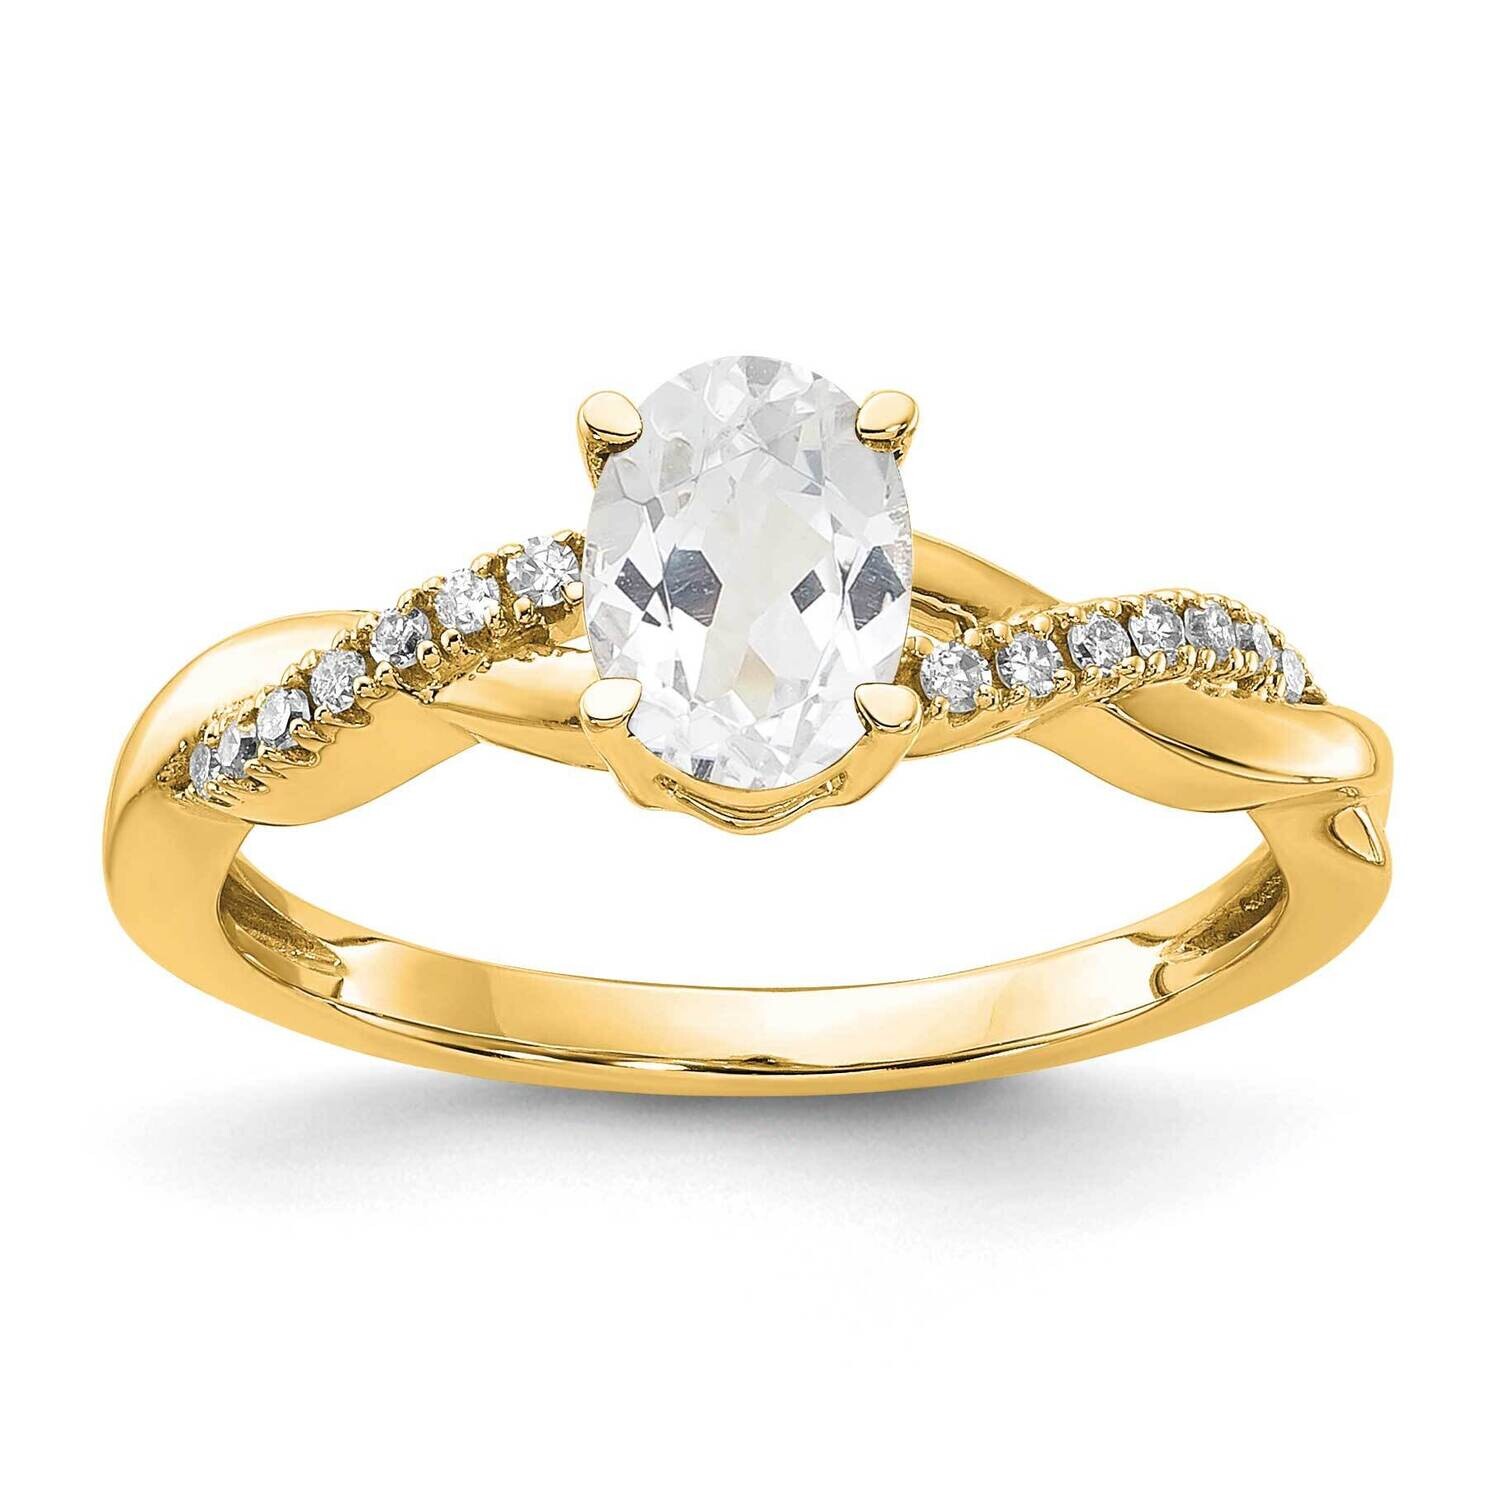 Oval White Topaz Diamond Ring 14k Gold RM4235-WT-008-YA